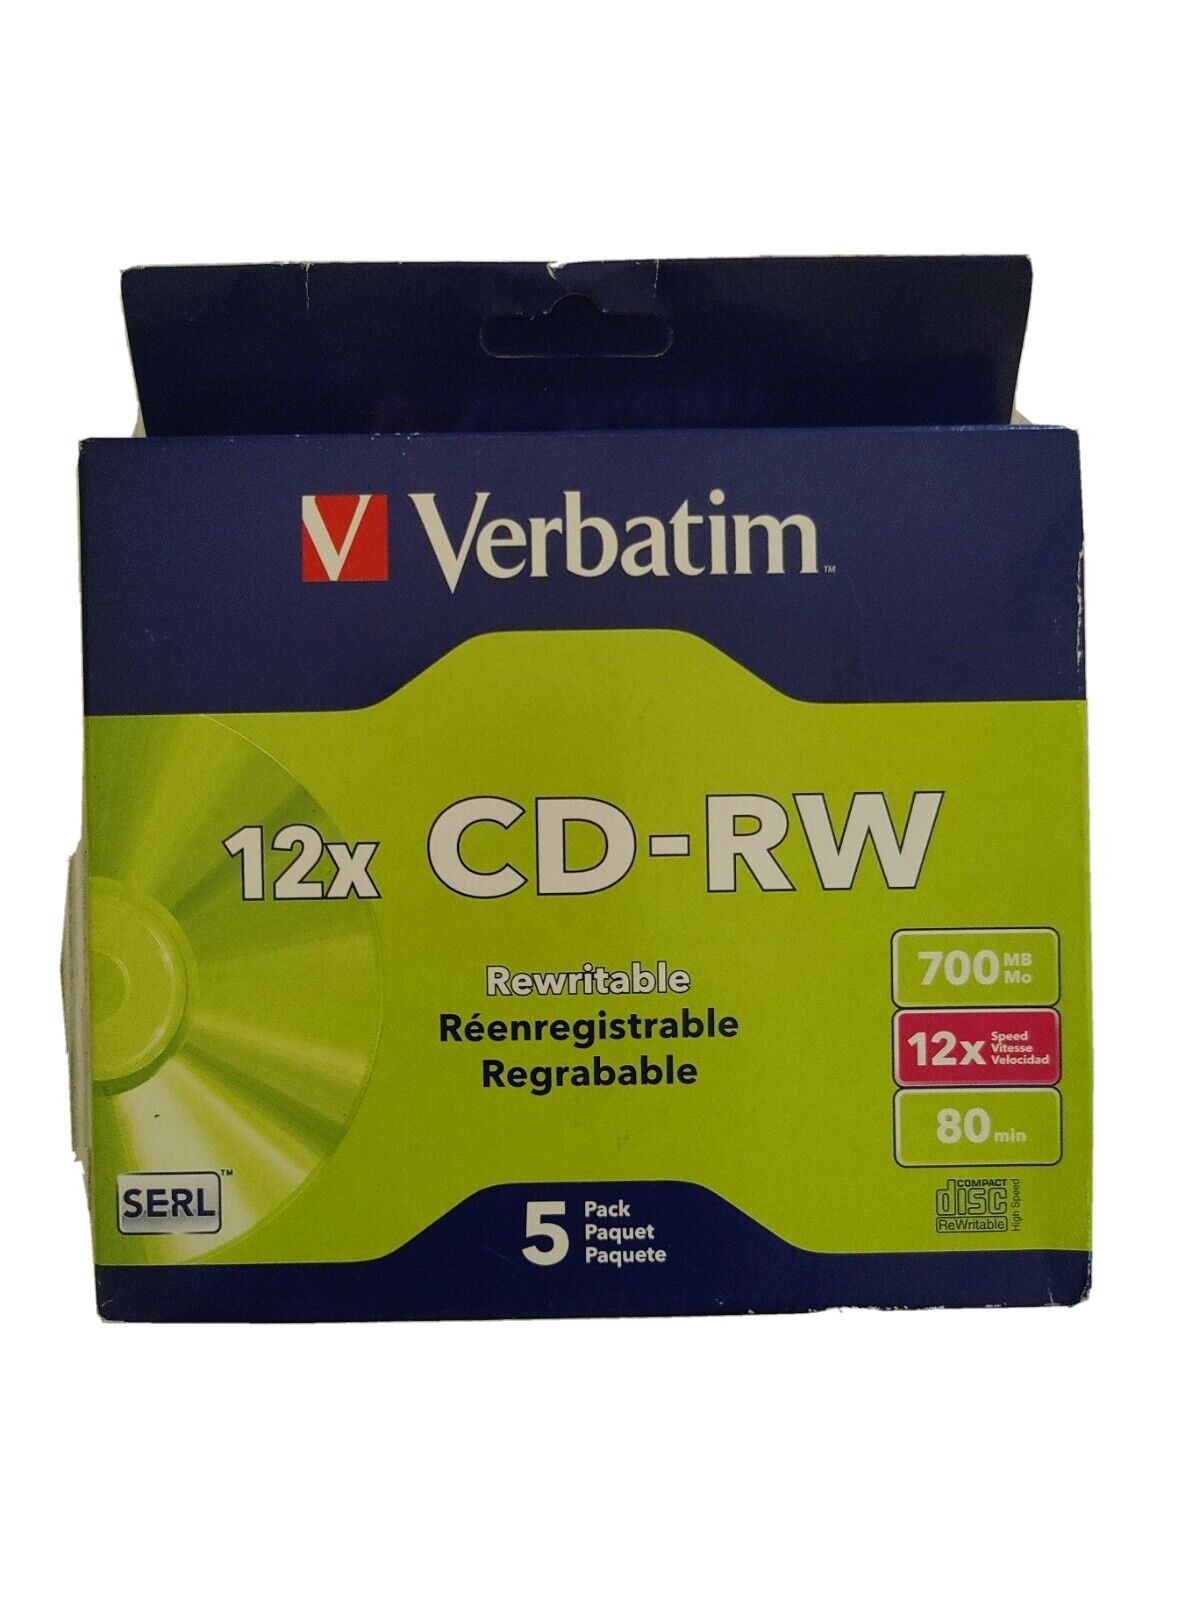 Verbatim CD-RW 700MB 2X-12X Rewritable Media Disc - 5 Pack Slim Case